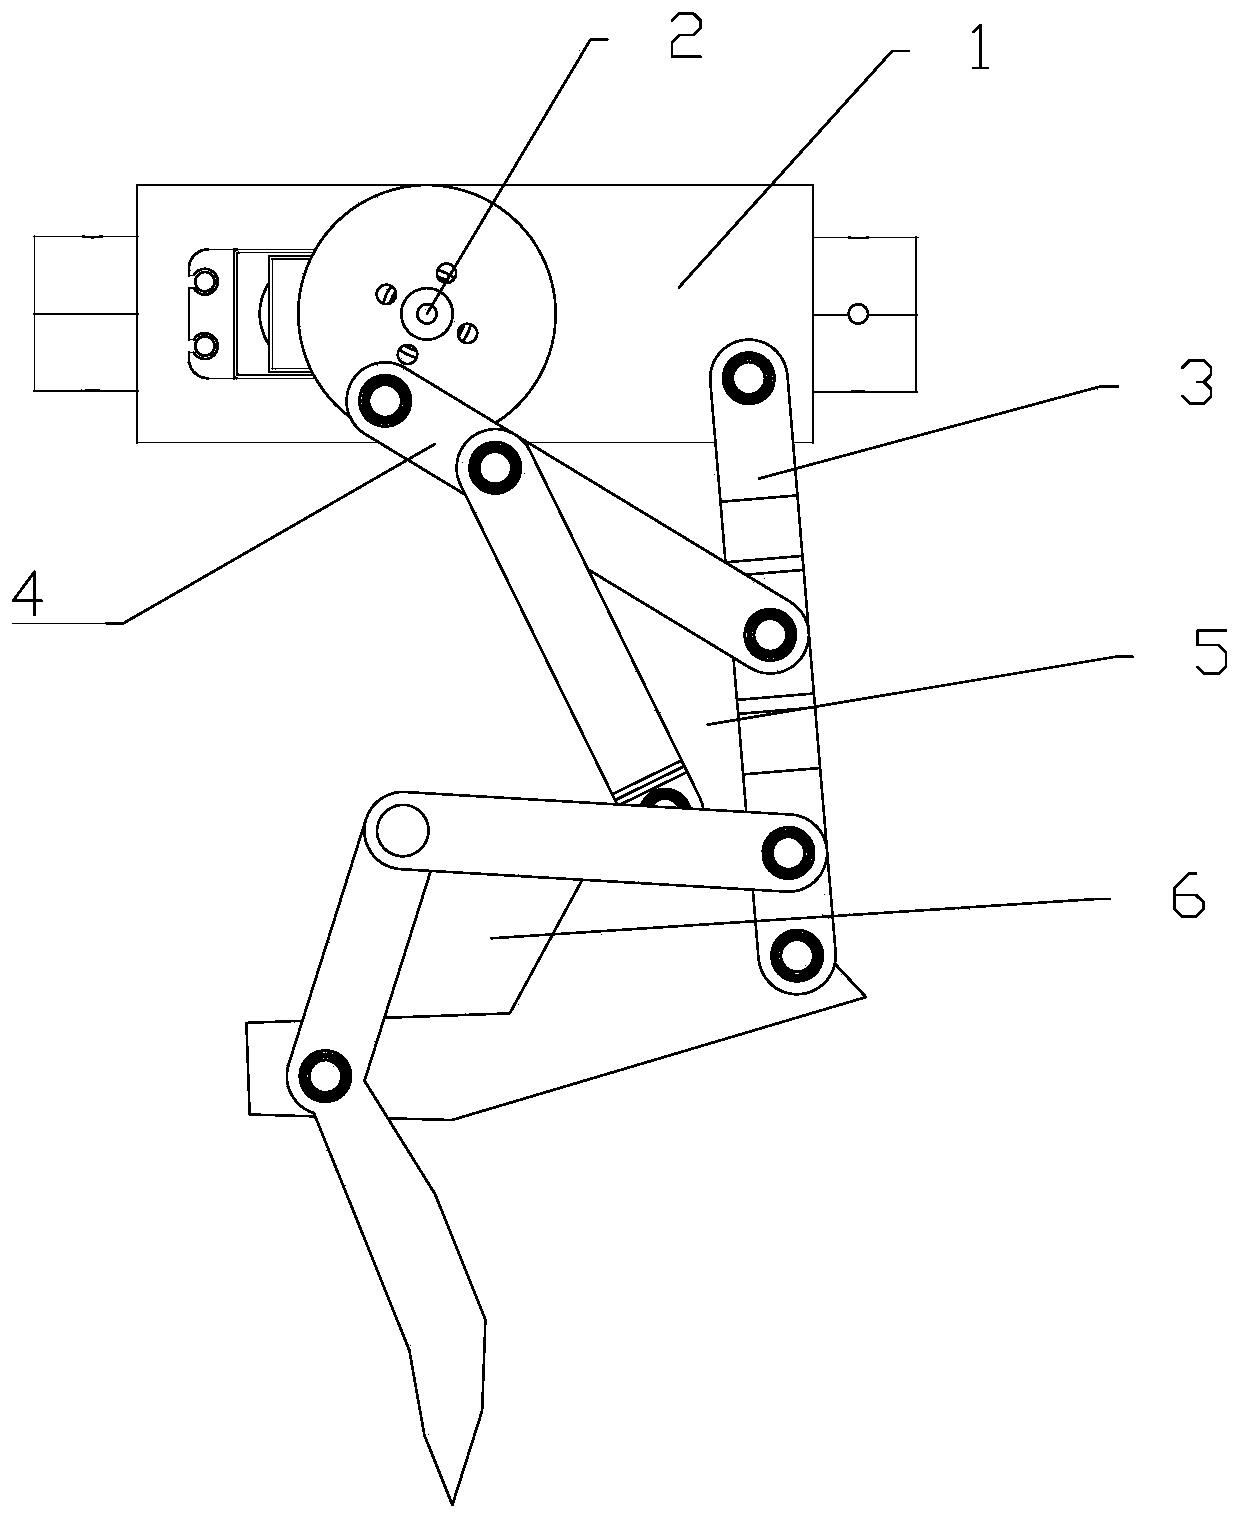 Multi-connecting rod bionic mechanical leg and crawling robot